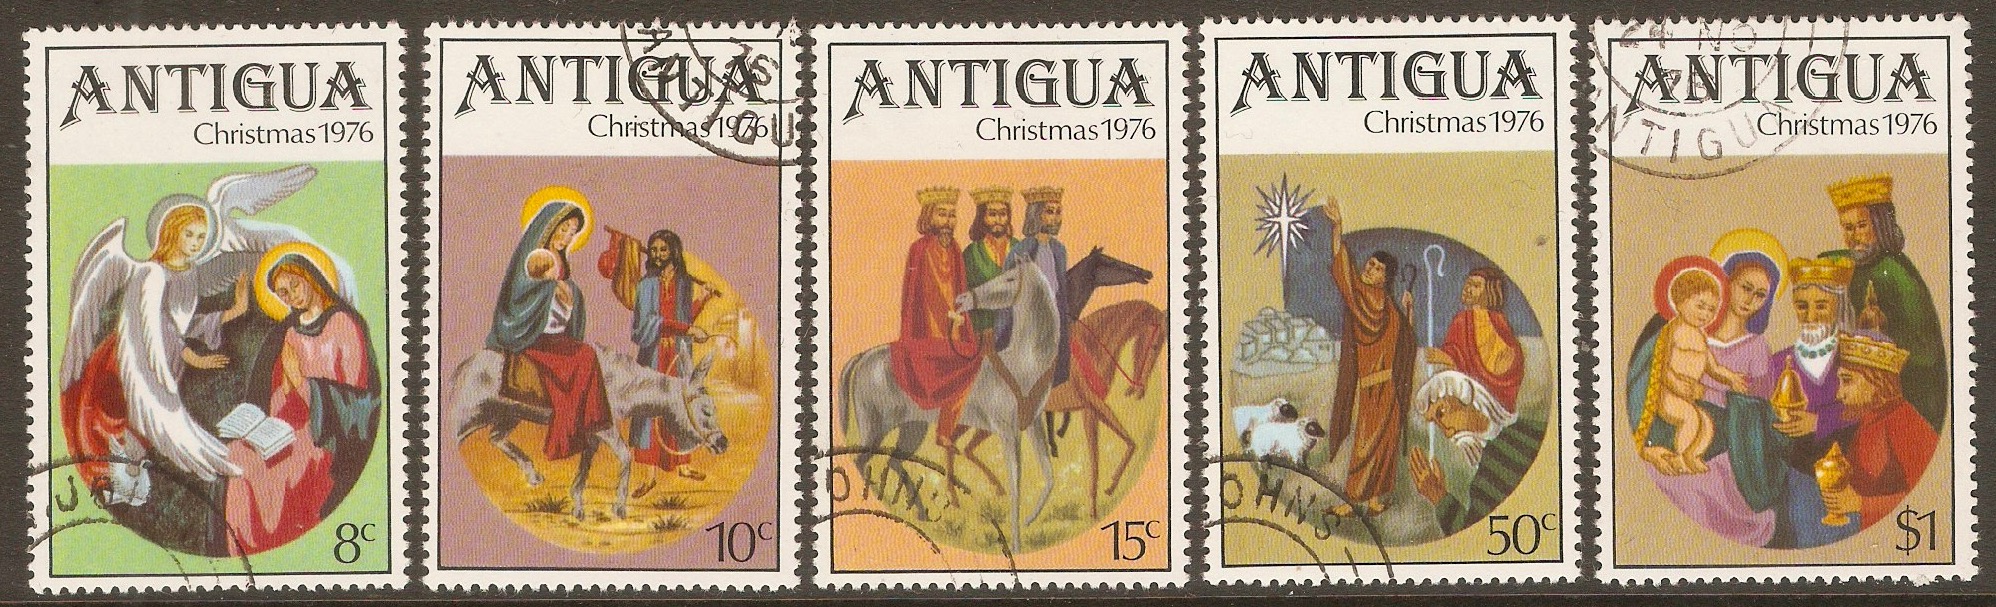 Antigua 1976 Christmas set. SG514-SG518.